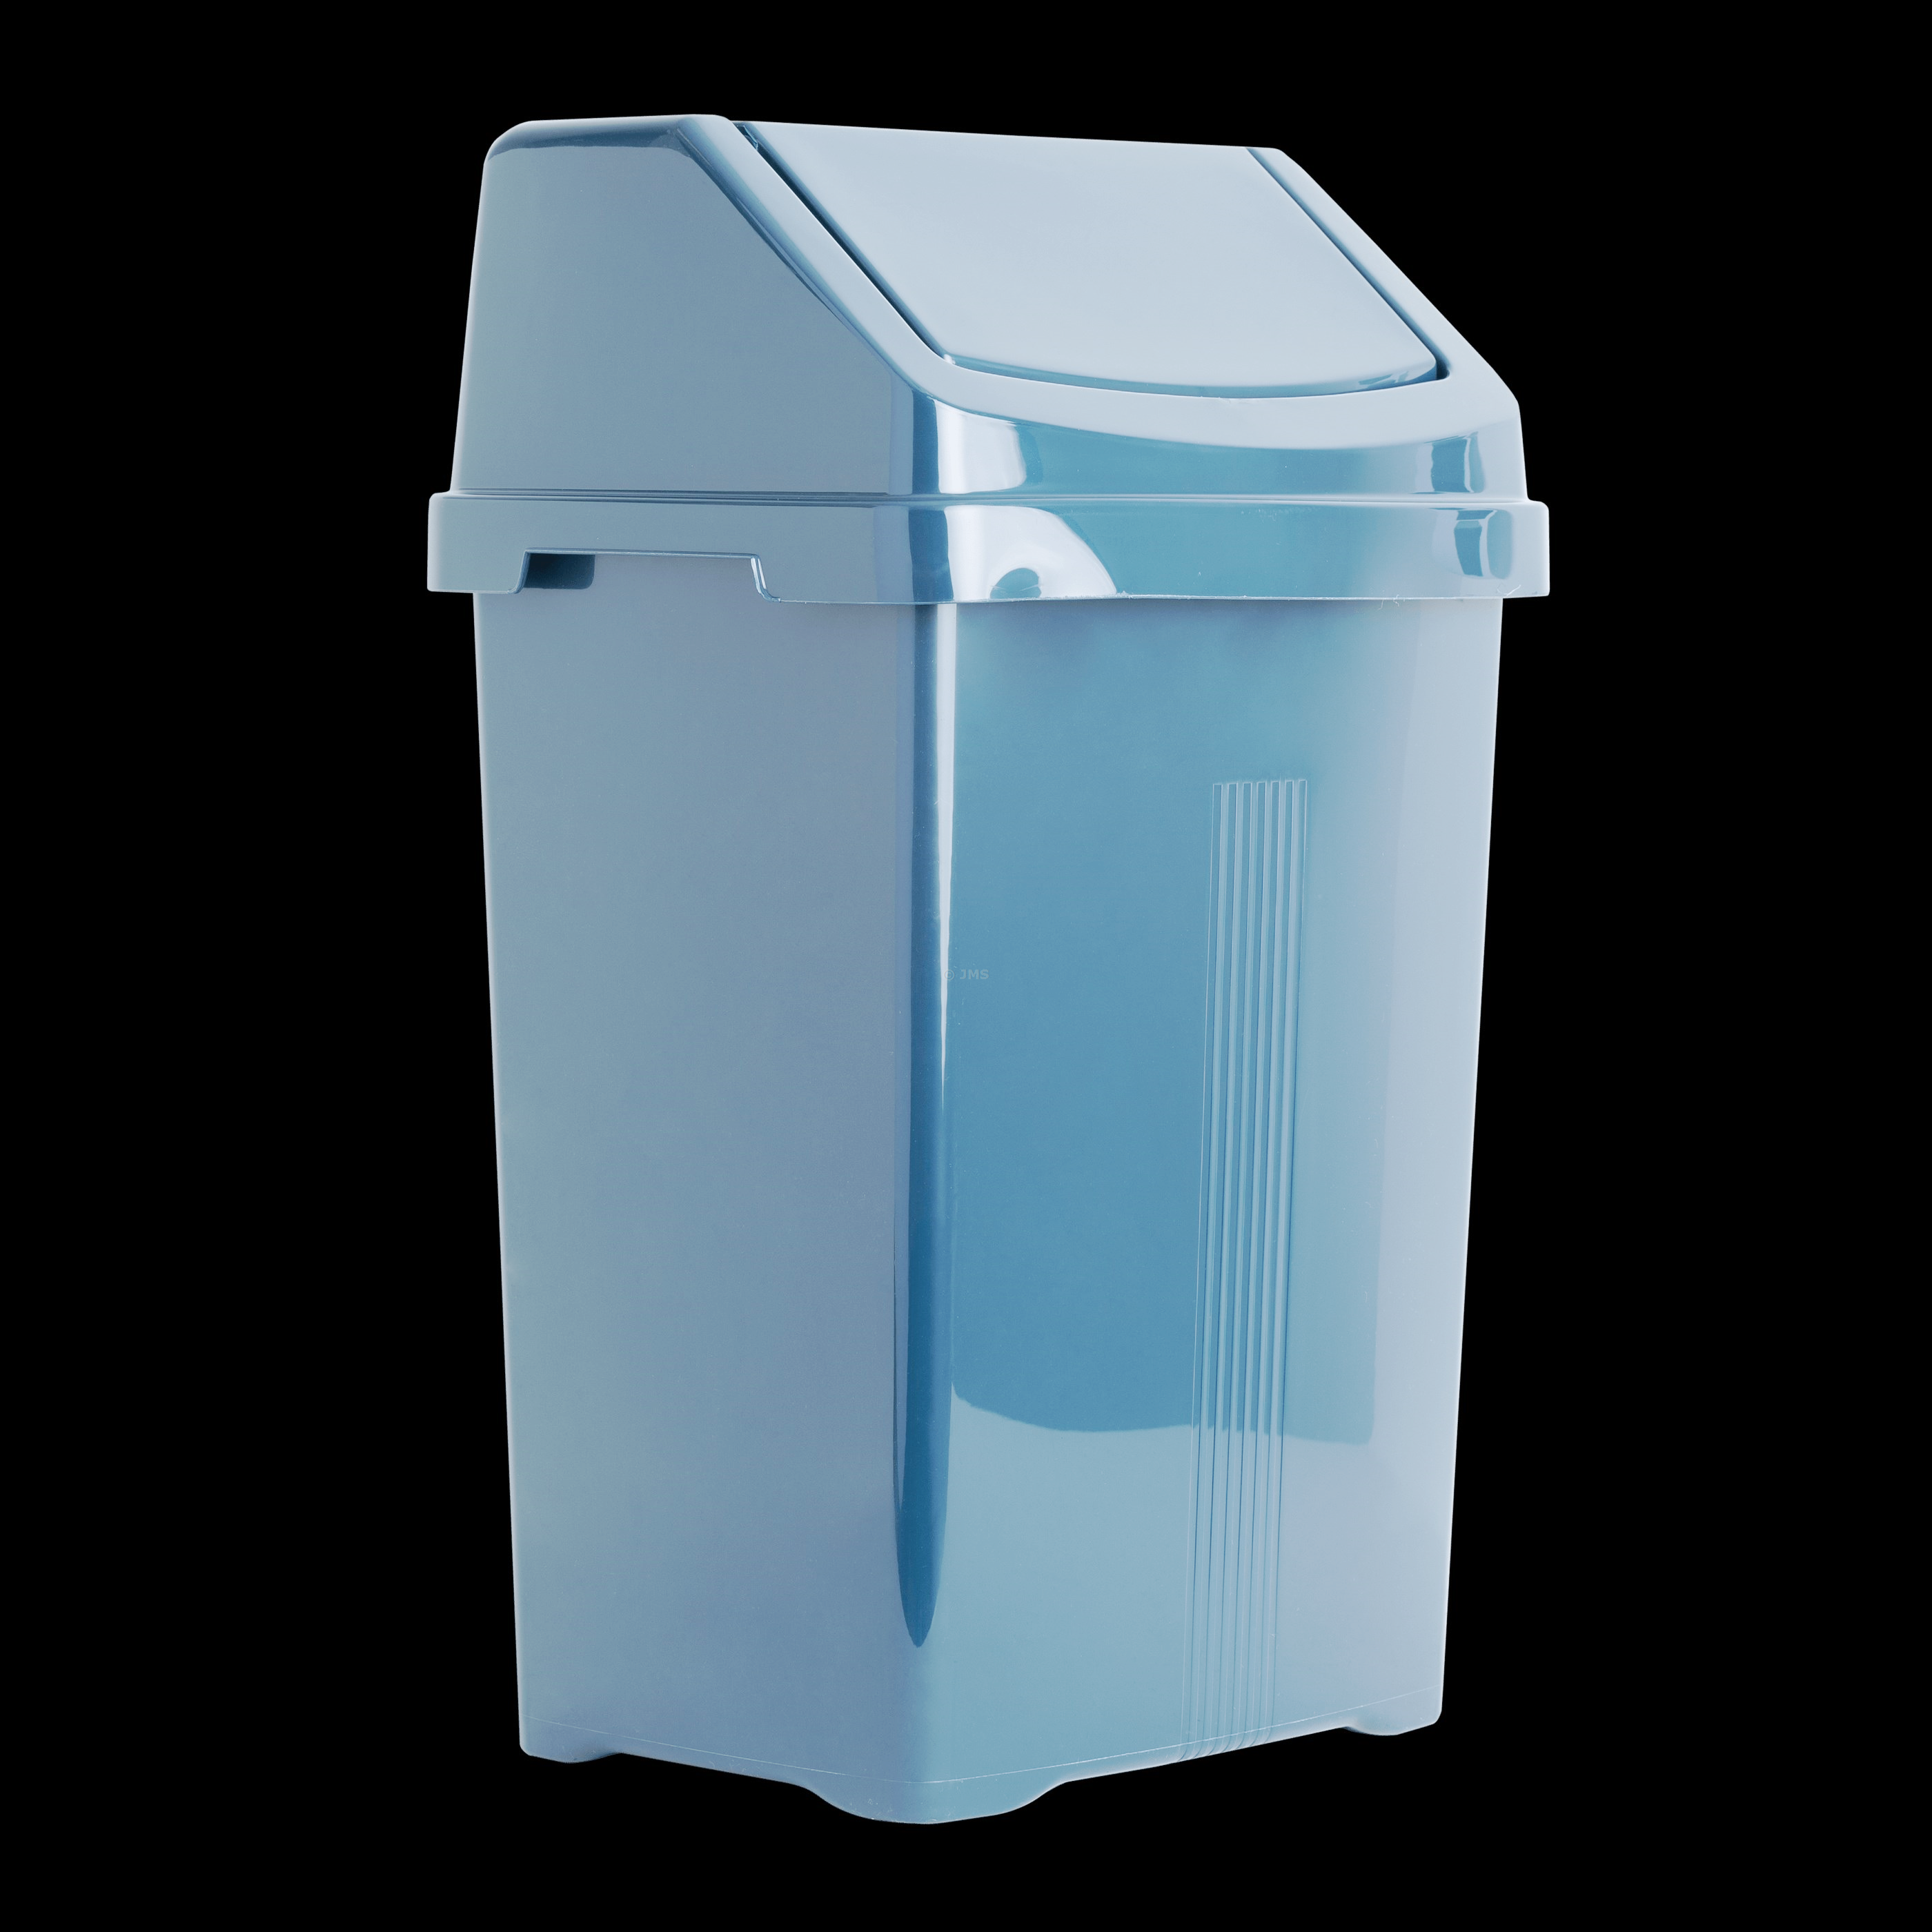 Casa 50L Swing Top Bin Navy Refused Waste Dustbin Rubbish Home Kitchen Office Bathroom